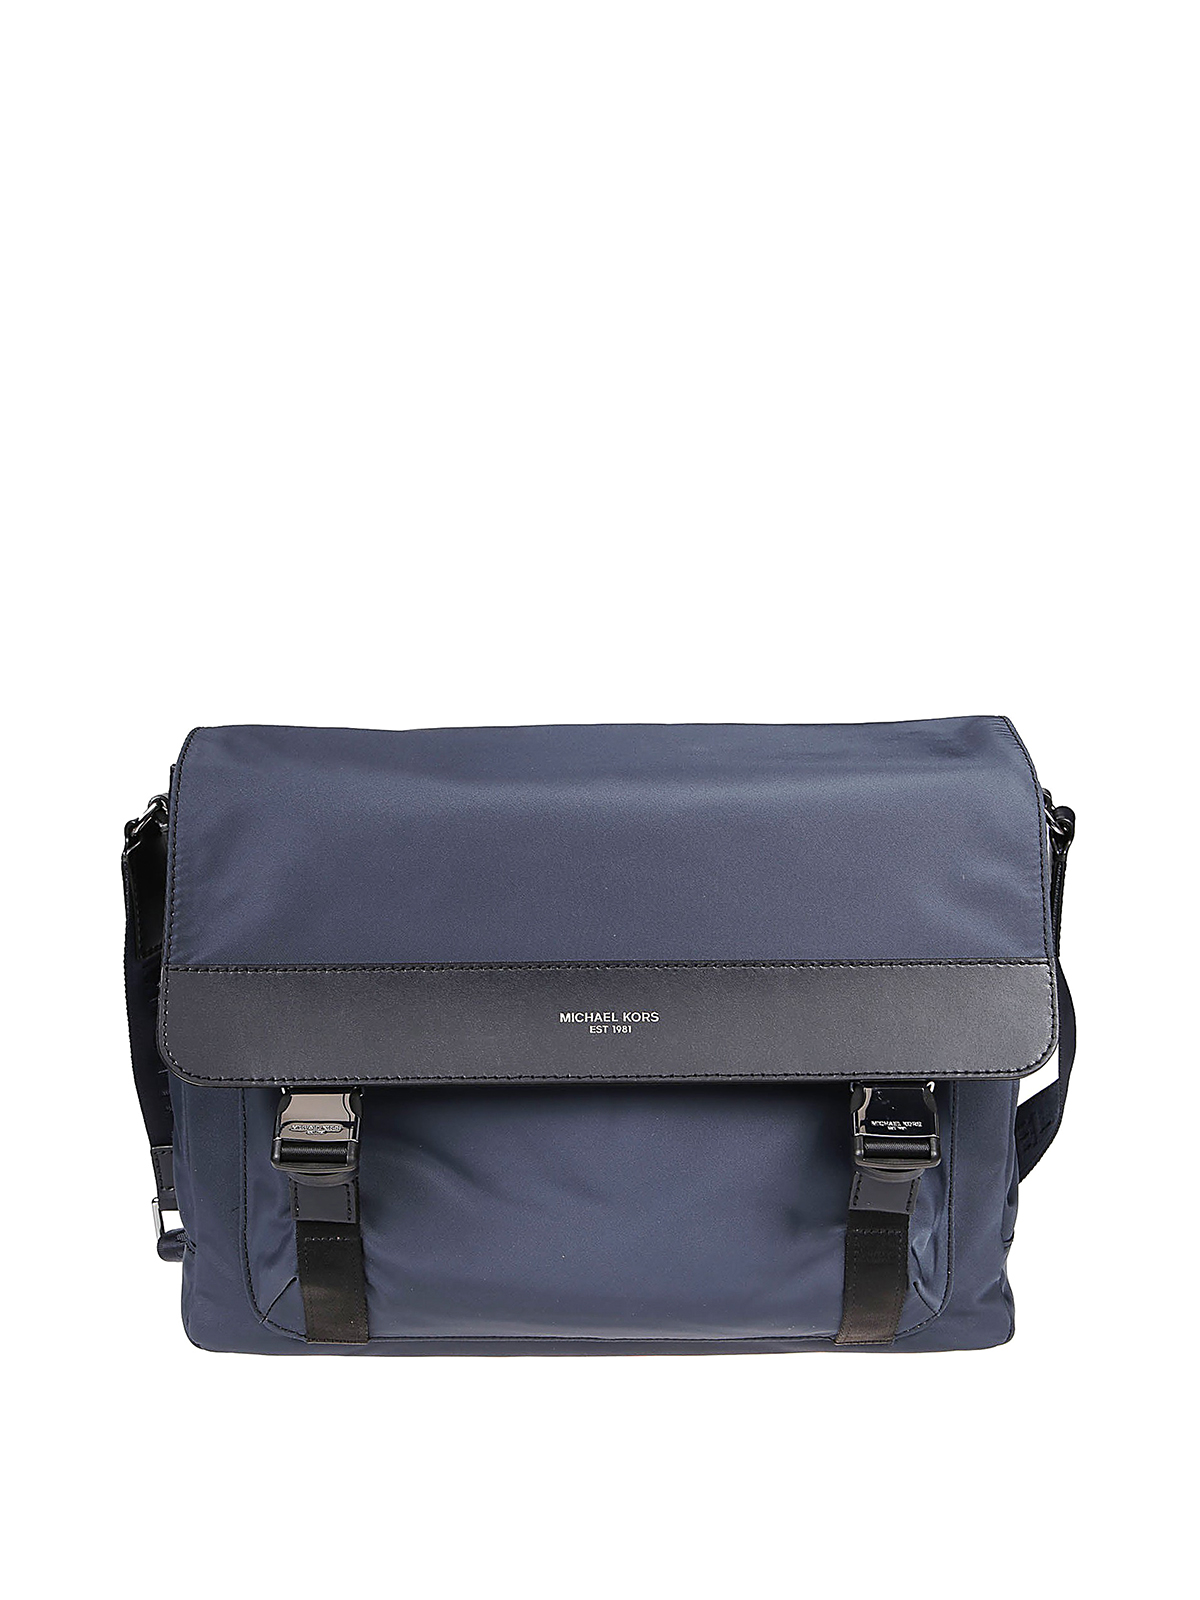 Shoulder bags Michael Kors - Brooklyn blue nylon messenger bag -  33F9LBNM2U406